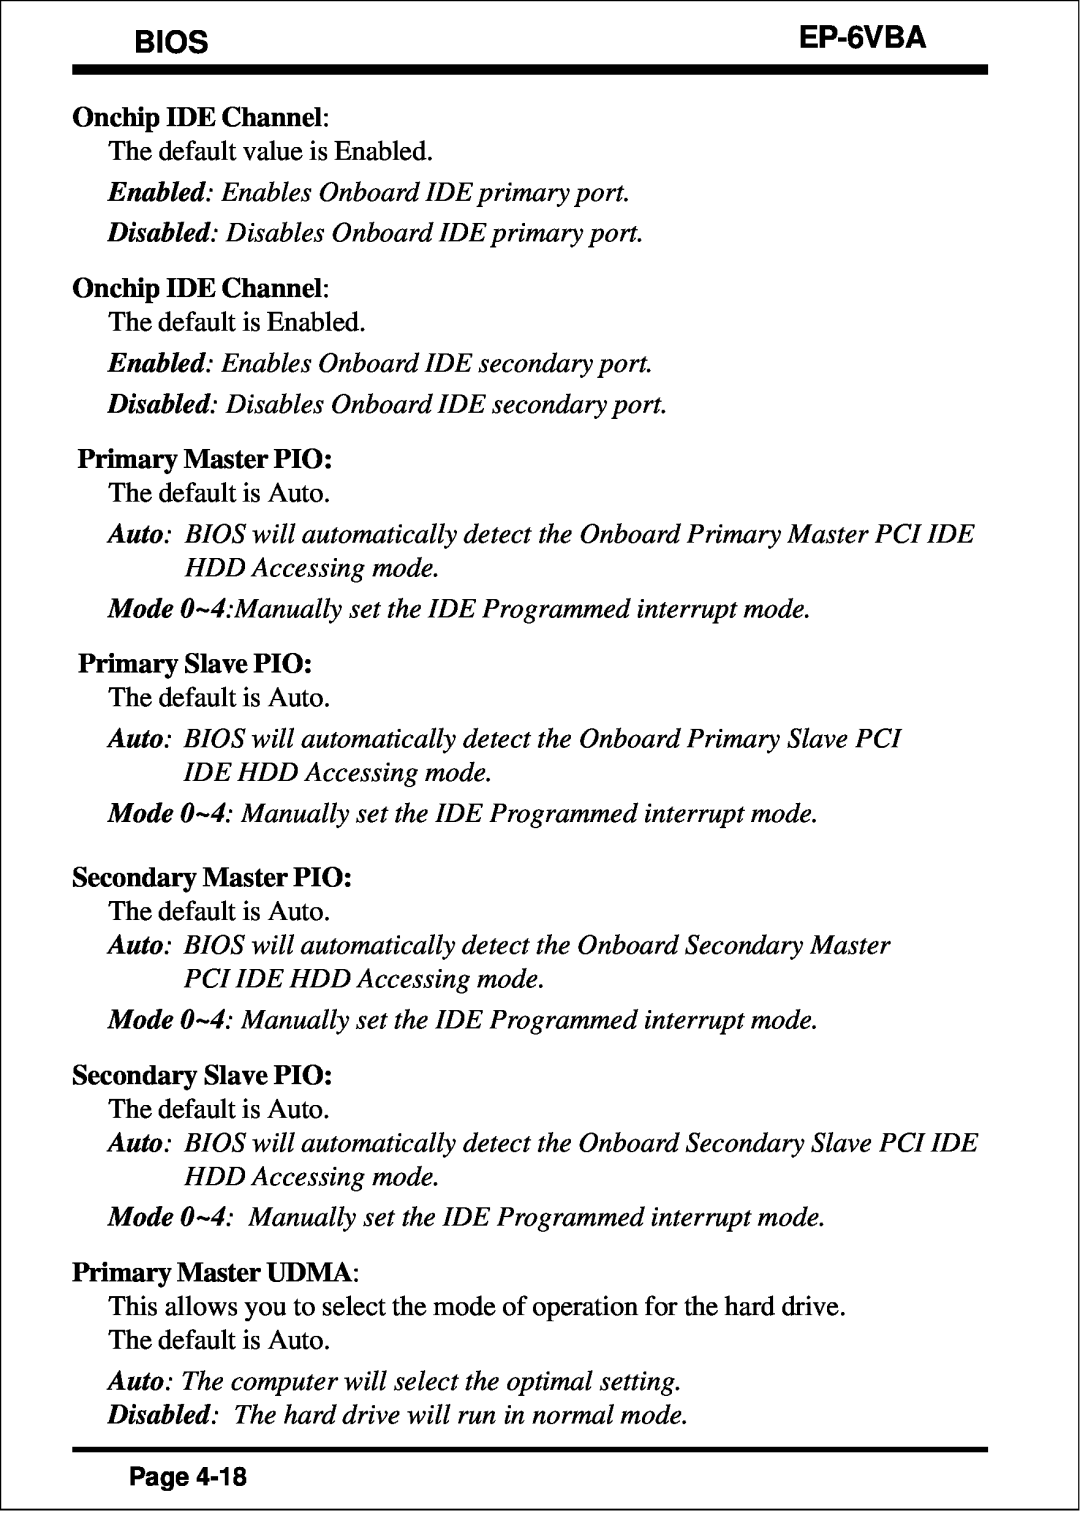 EPoX Computer EP-6VBA specifications Bios, Onchip IDE Channel, Primary Master PIO, Primary Slave PIO, Secondary Master PIO 